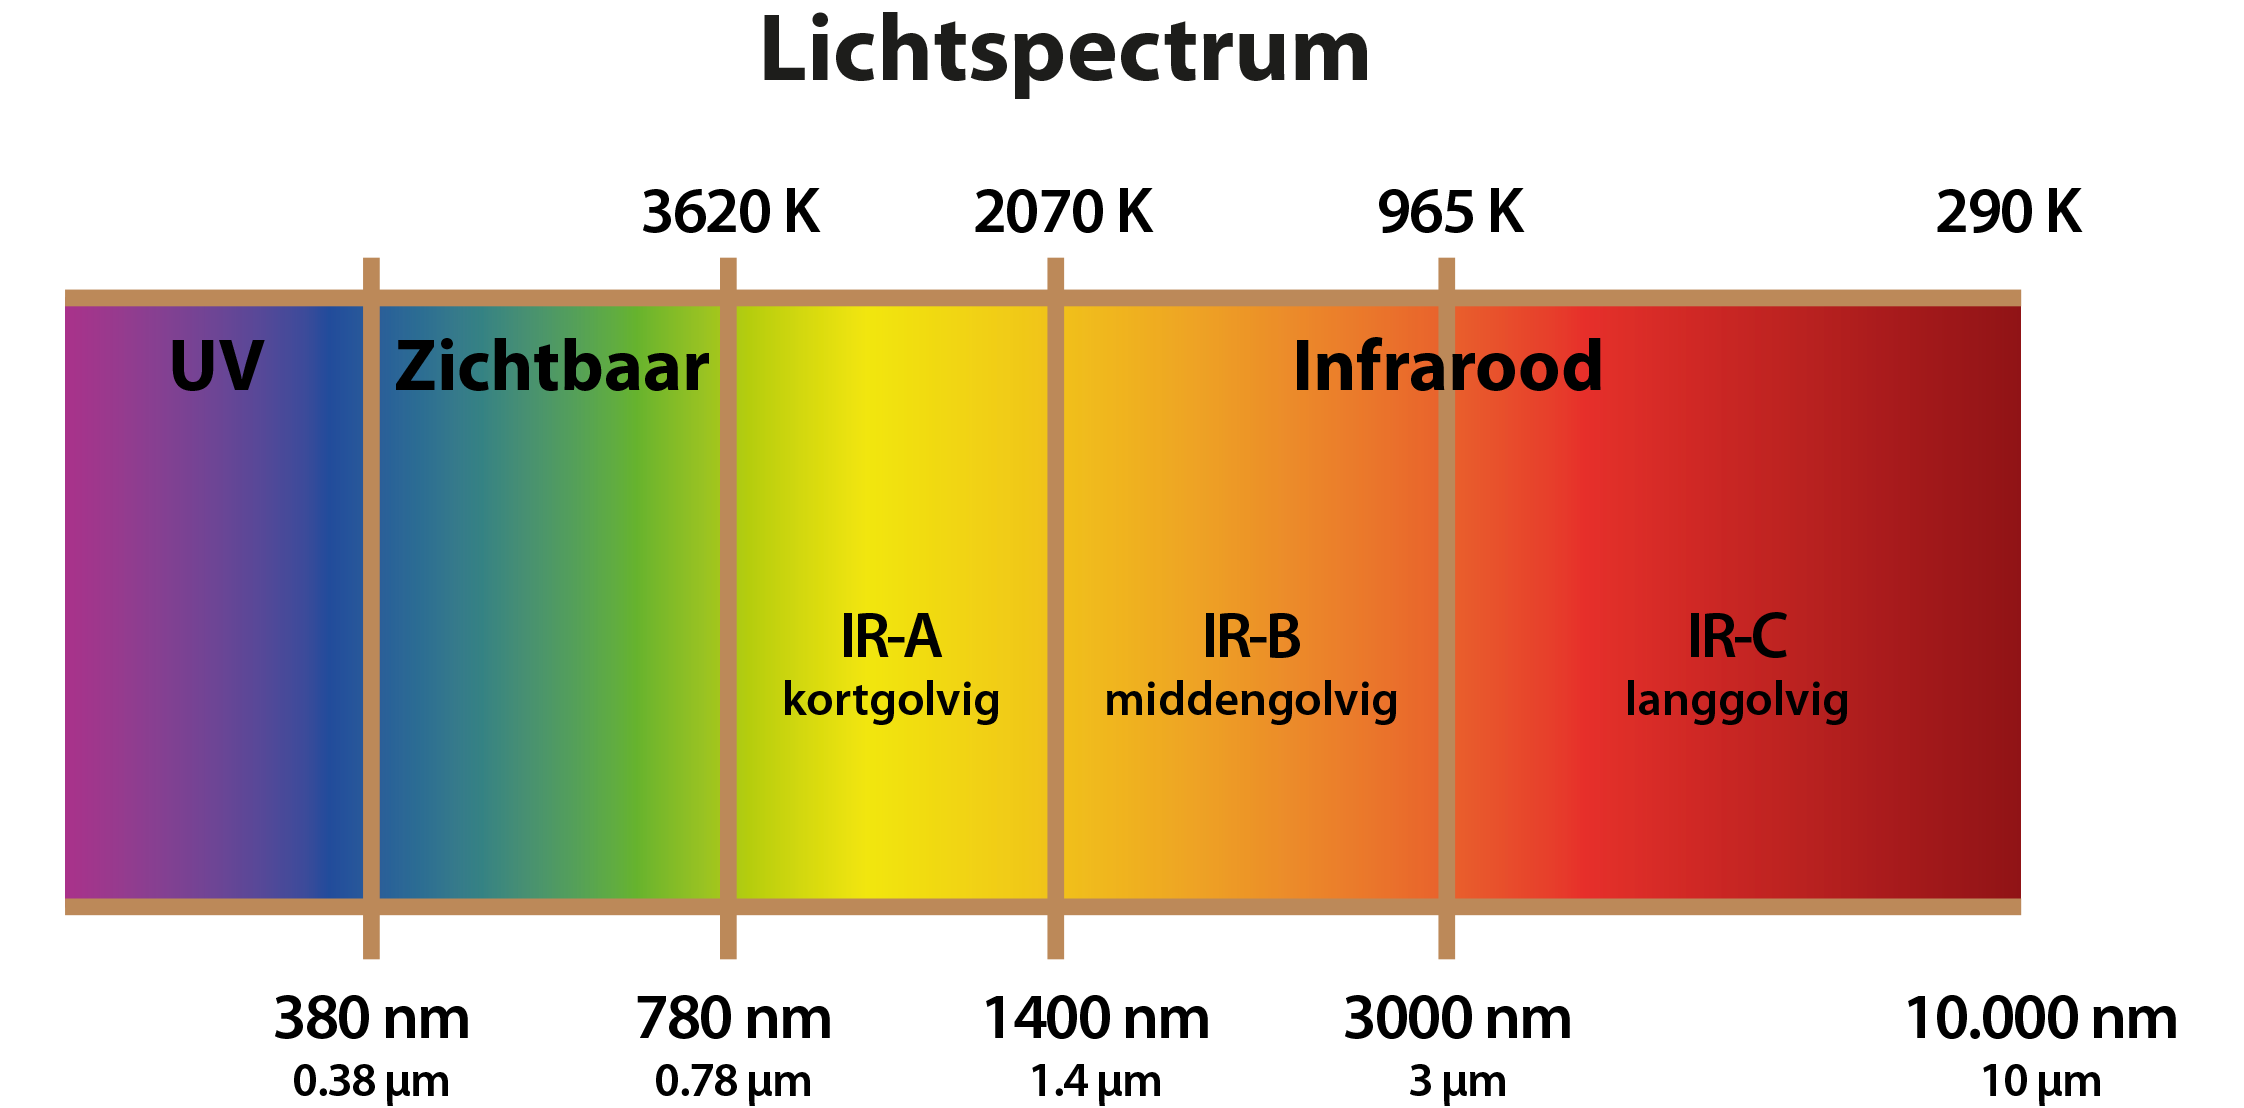 Lichtspectrum golflengtes infrarood